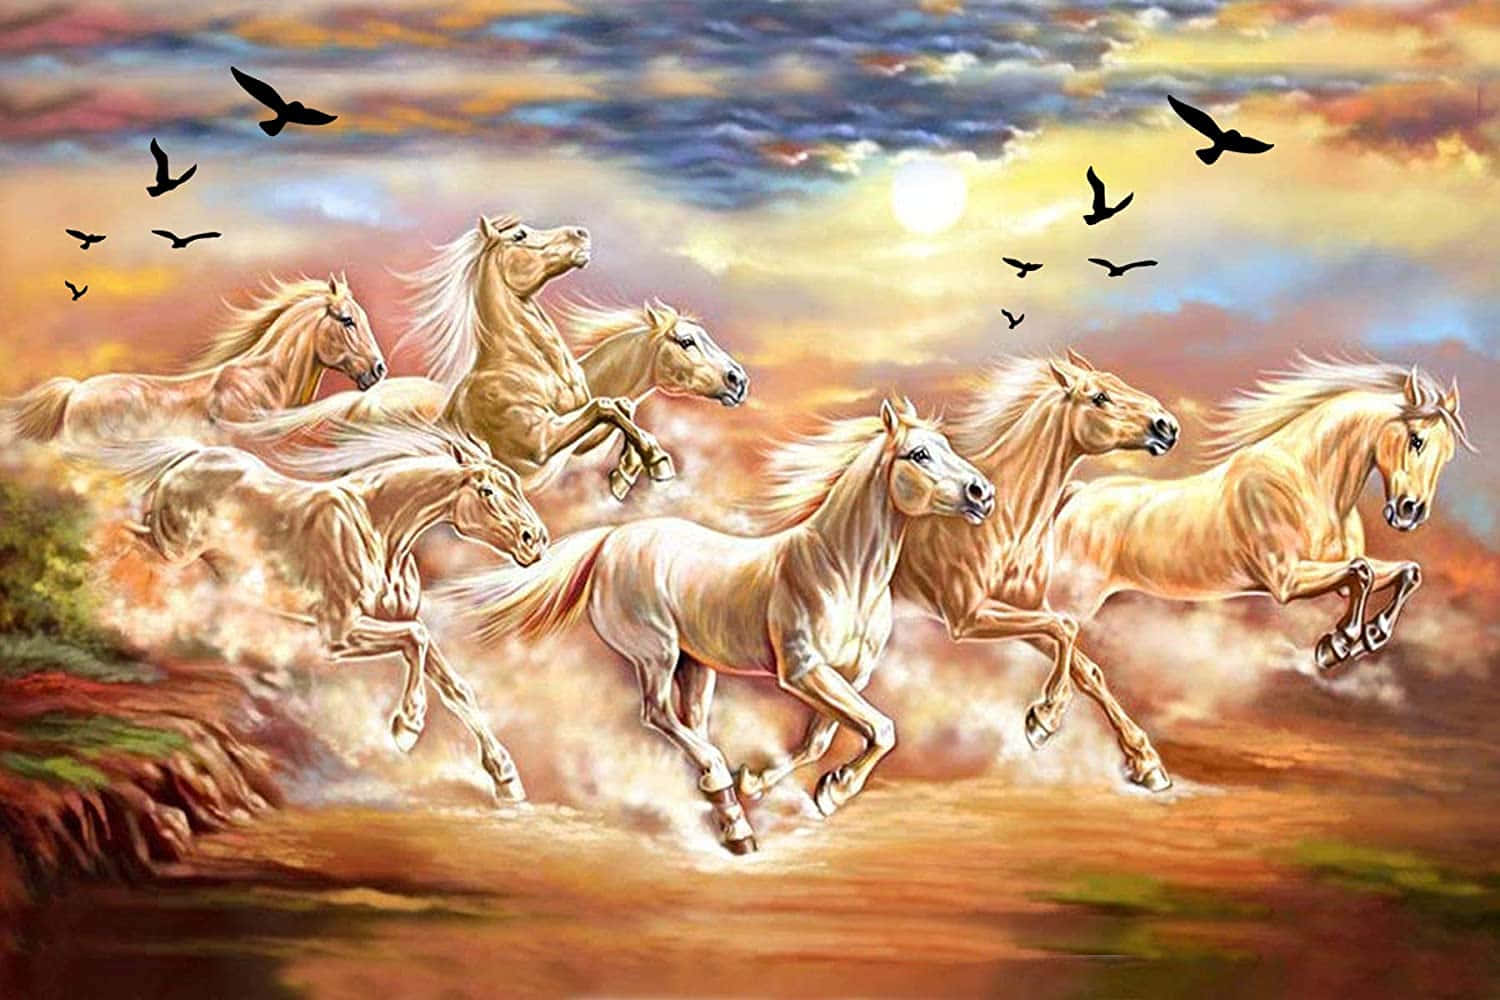 7 White Horses With Black Birds Wallpaper